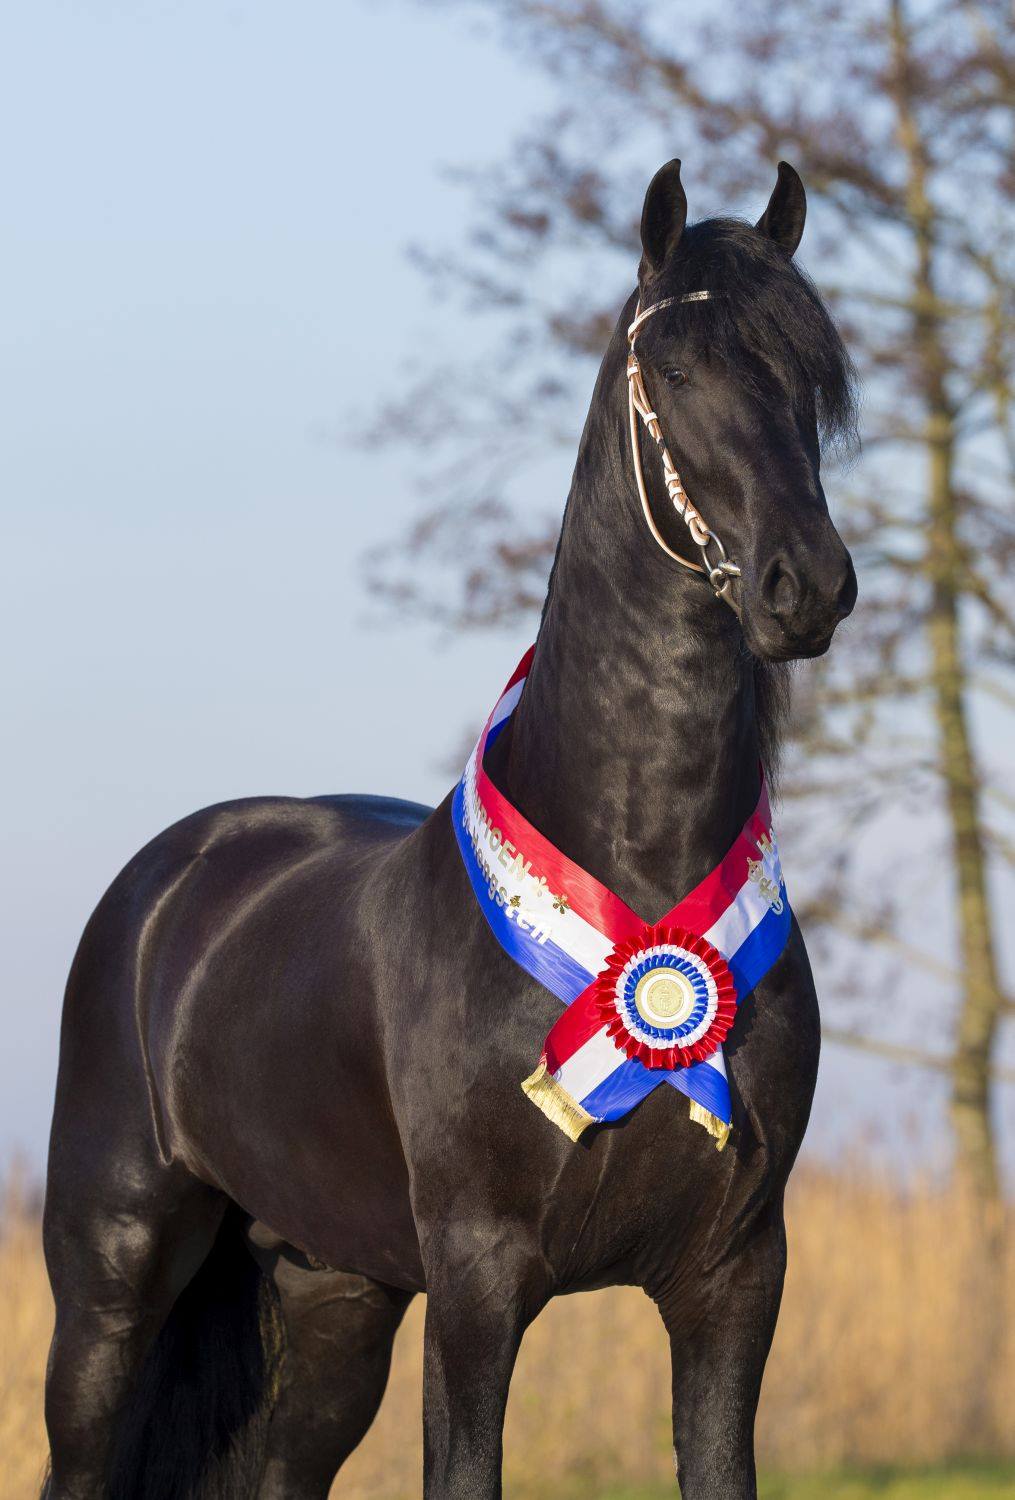 The KFPS Royal Friesian Horse1